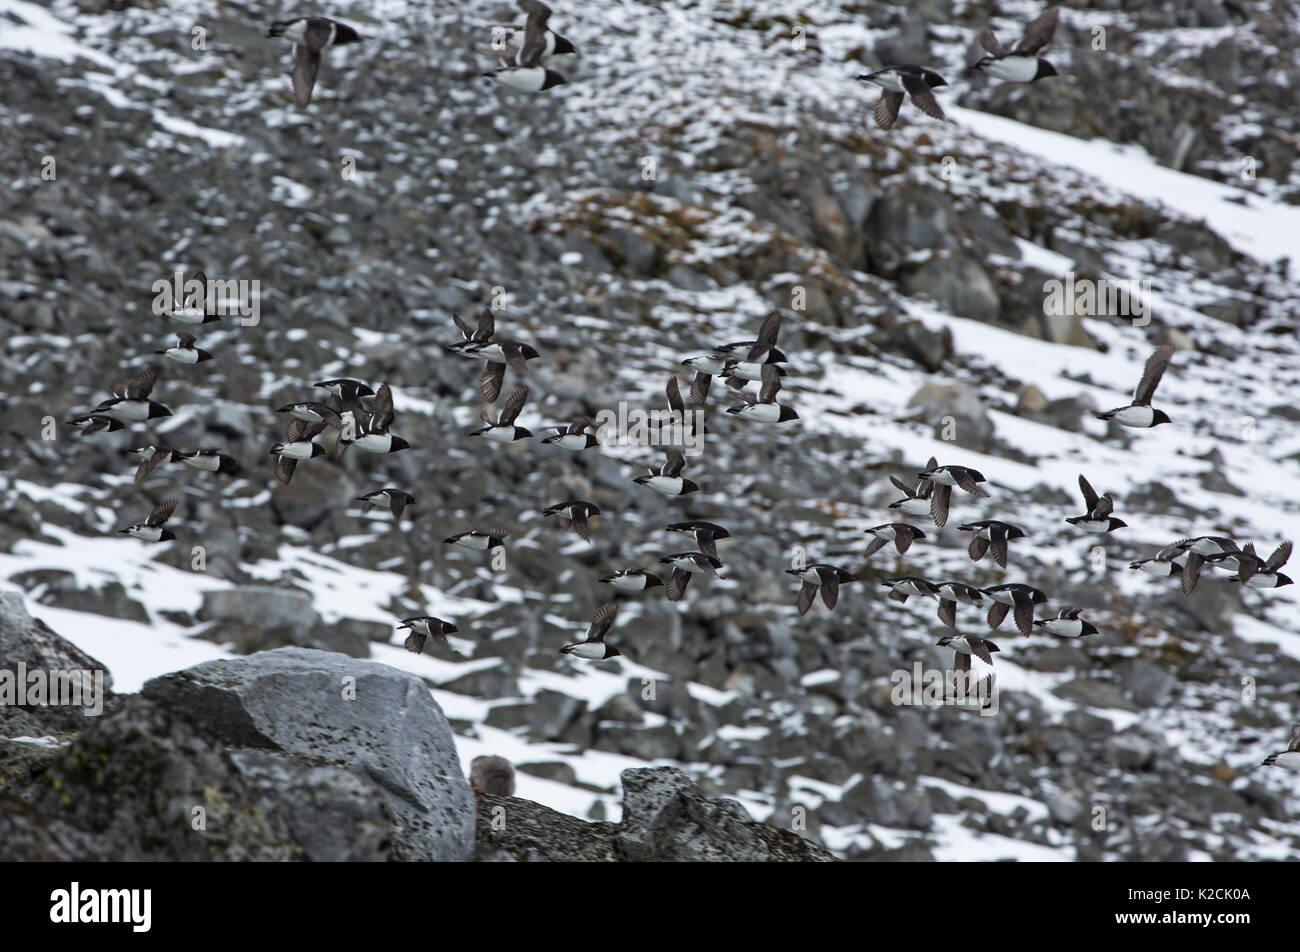 Little Auks, Alle alle, flock flying over scree slopes at breeding colony. Taken in June, Magdalenefjord, Spitsbergen, Svalbard, Norway Stock Photo